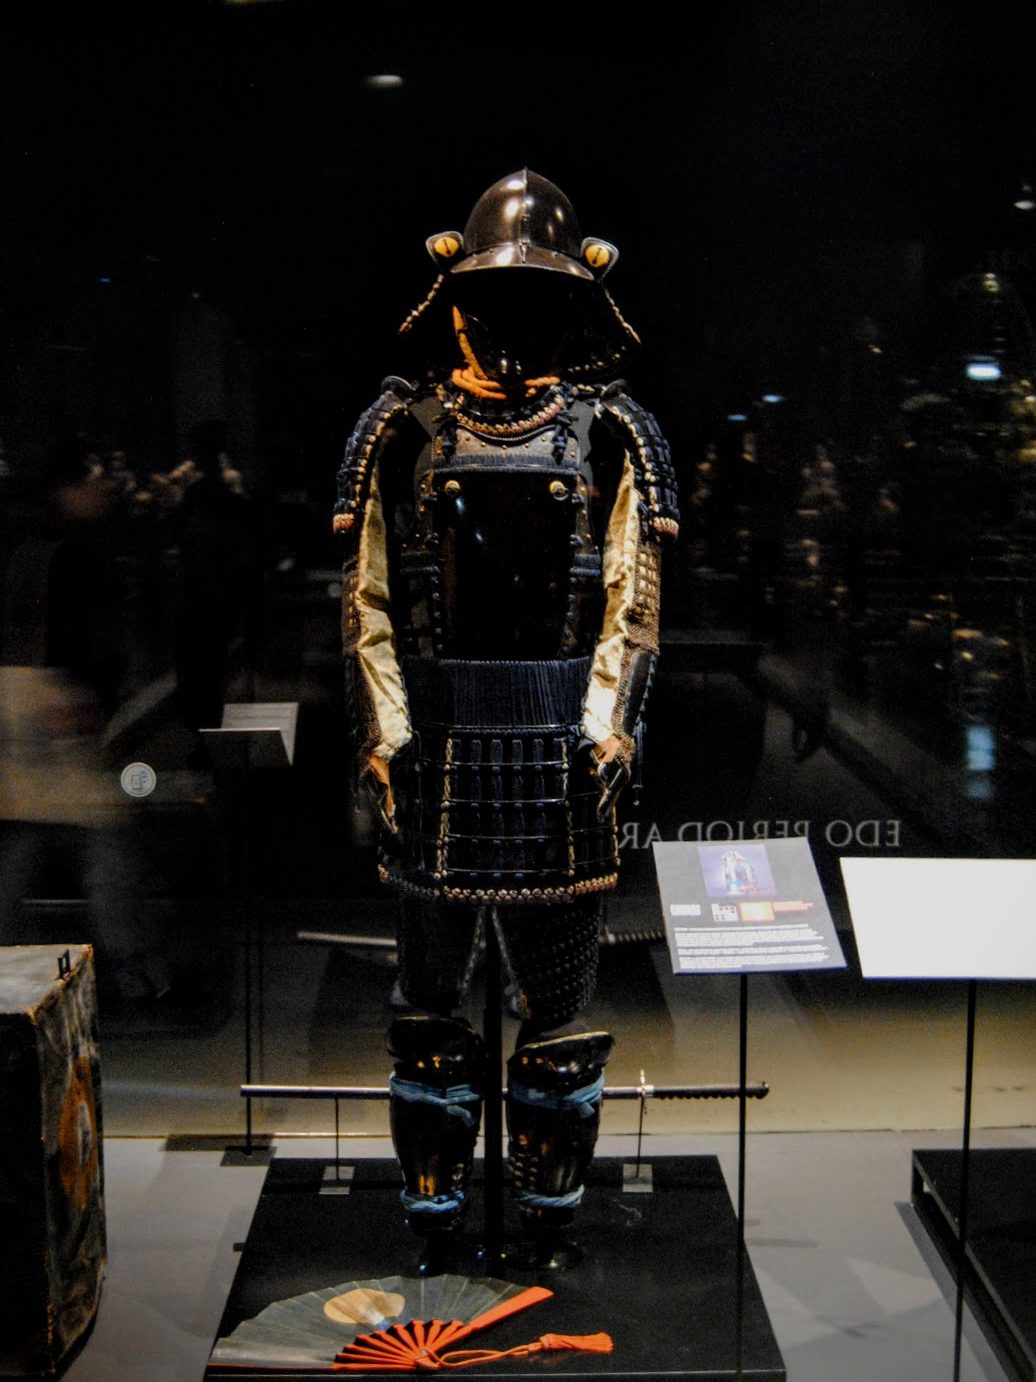 A black samurai set of armor in a museum